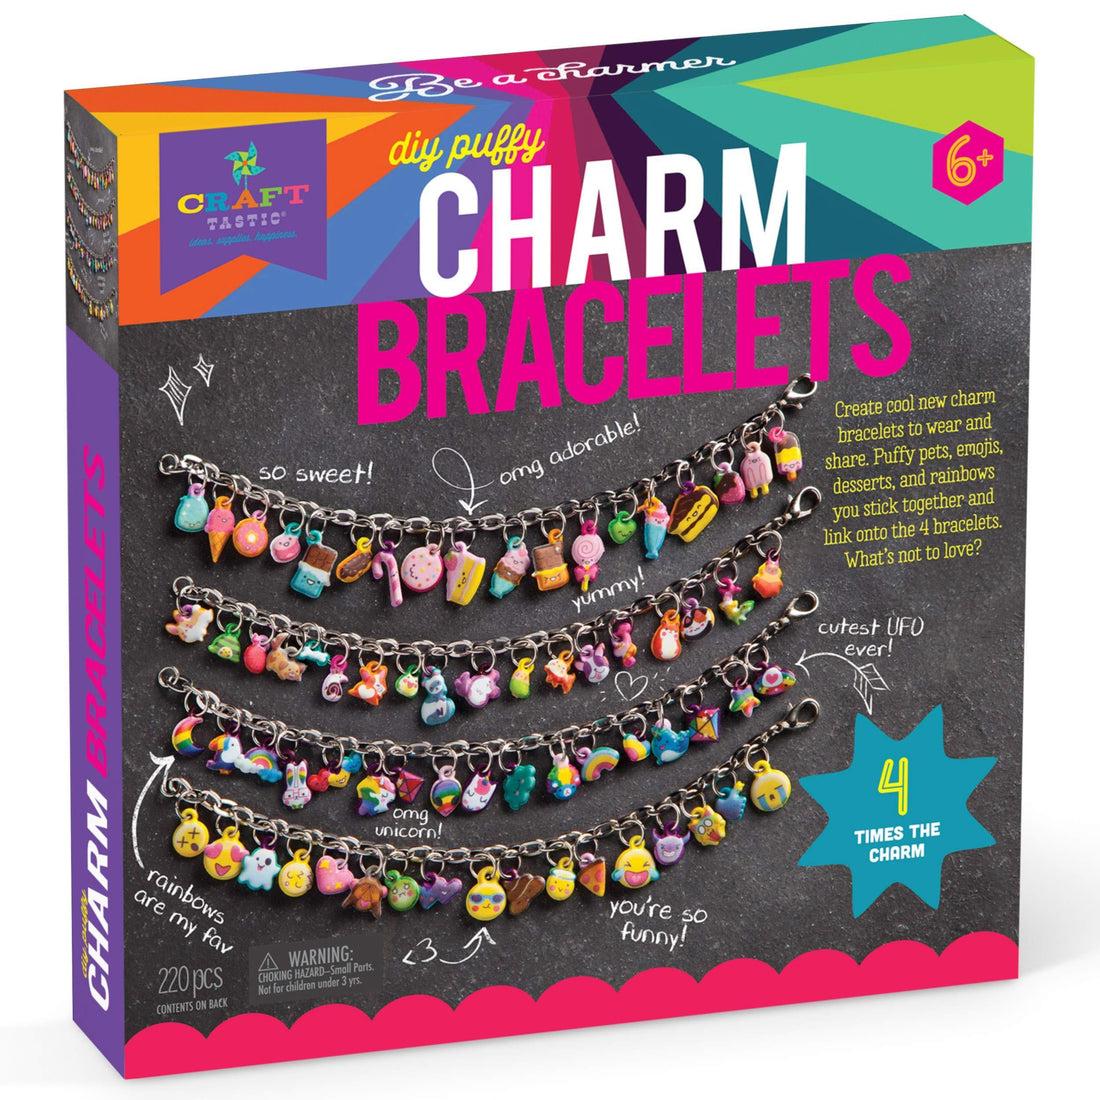 Smiley Face Flower Charms, Rainbow Charms, Charm Bracelets